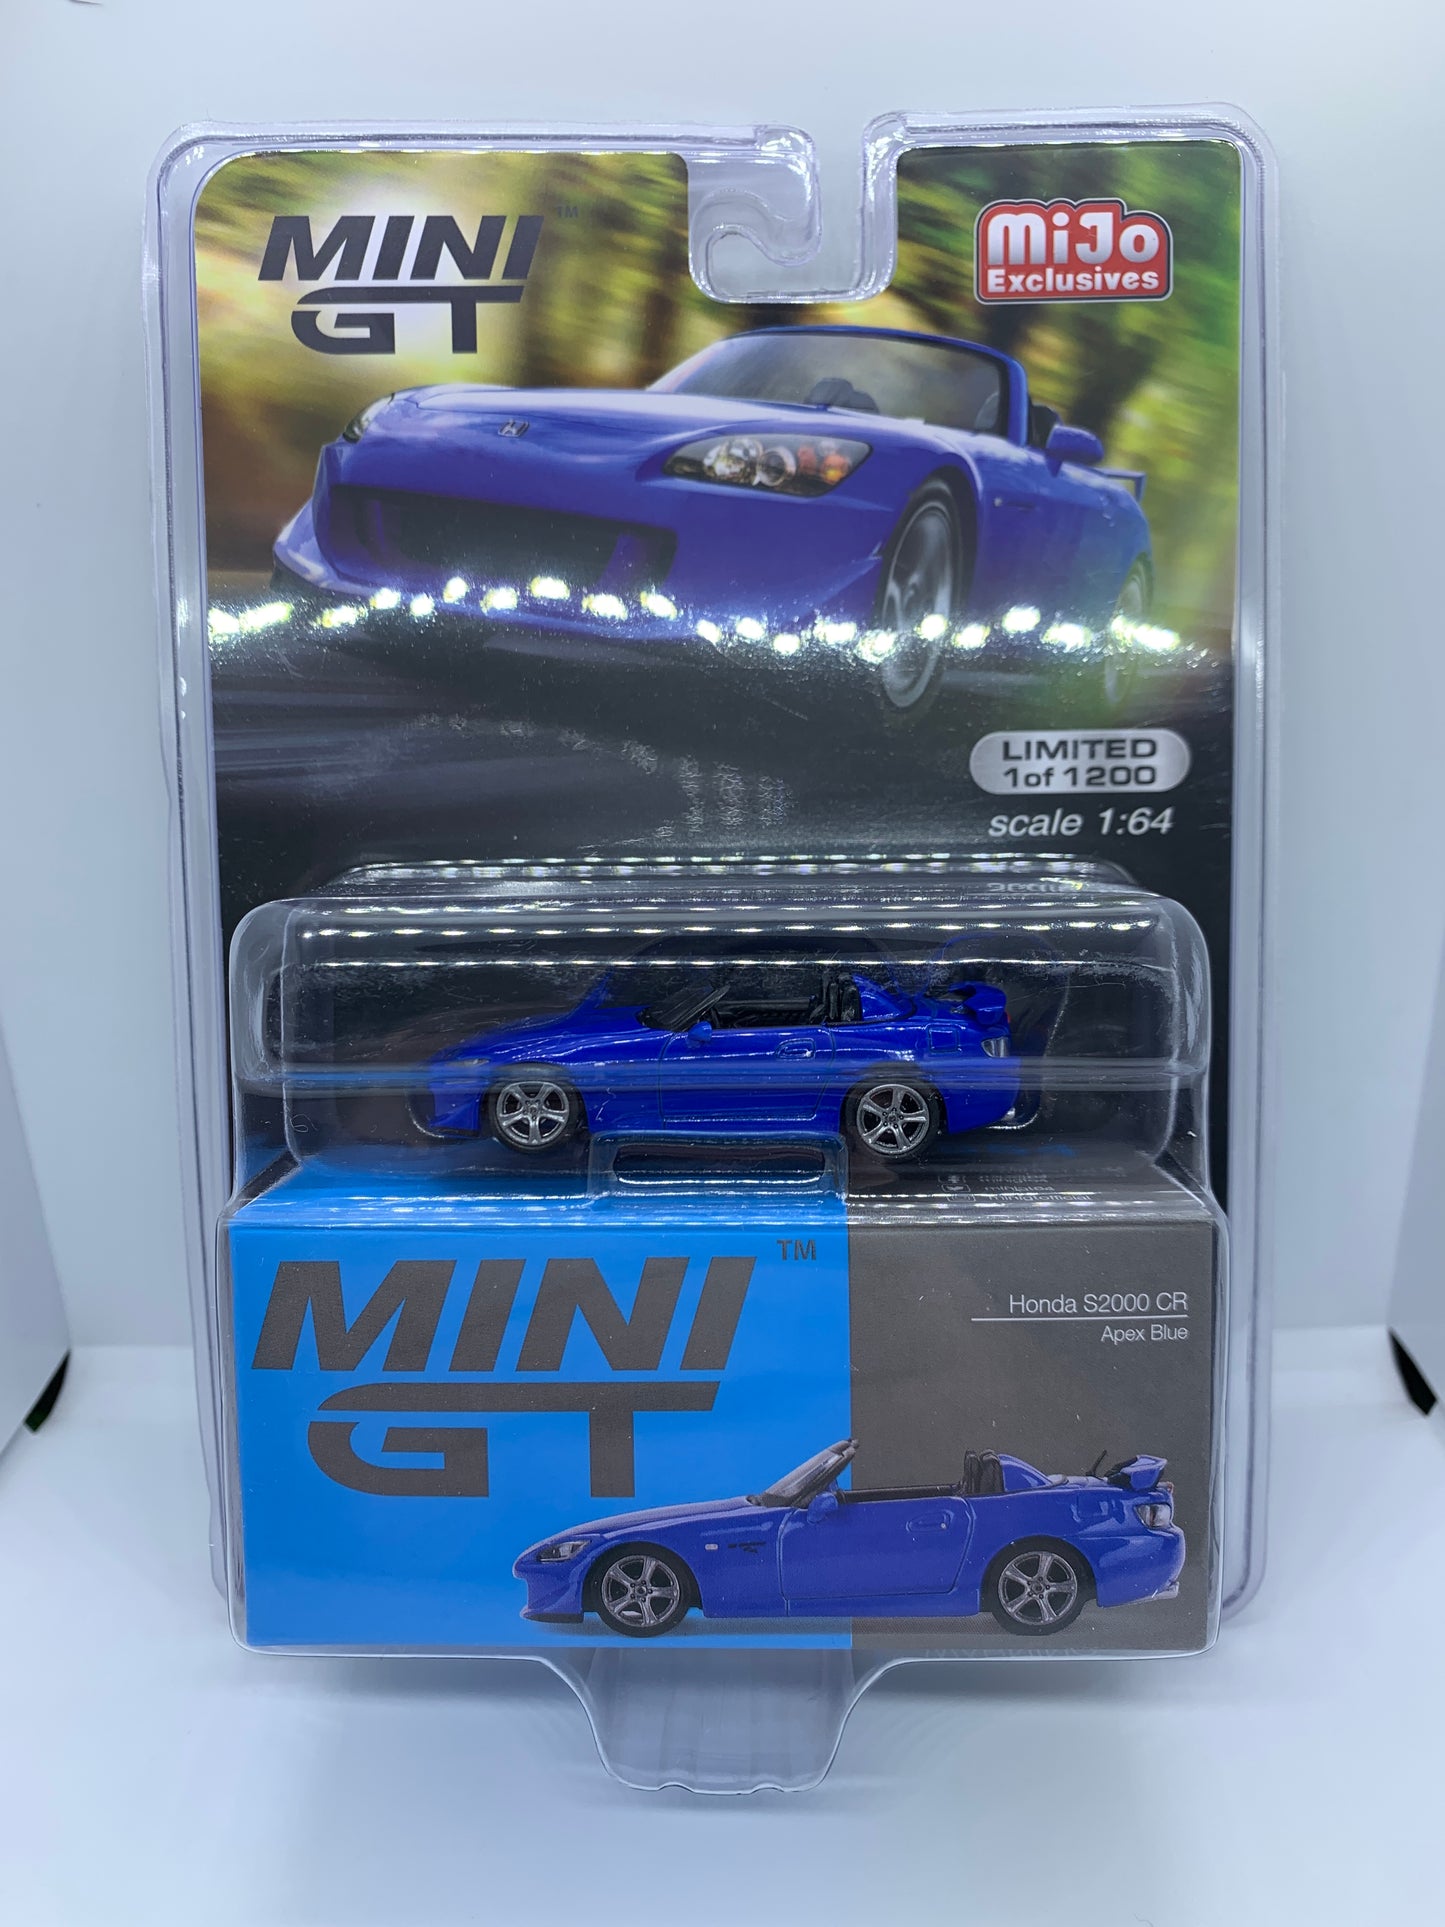 MINI GT - Honda S2000 CR Apex Blue - Display Blister Packaging